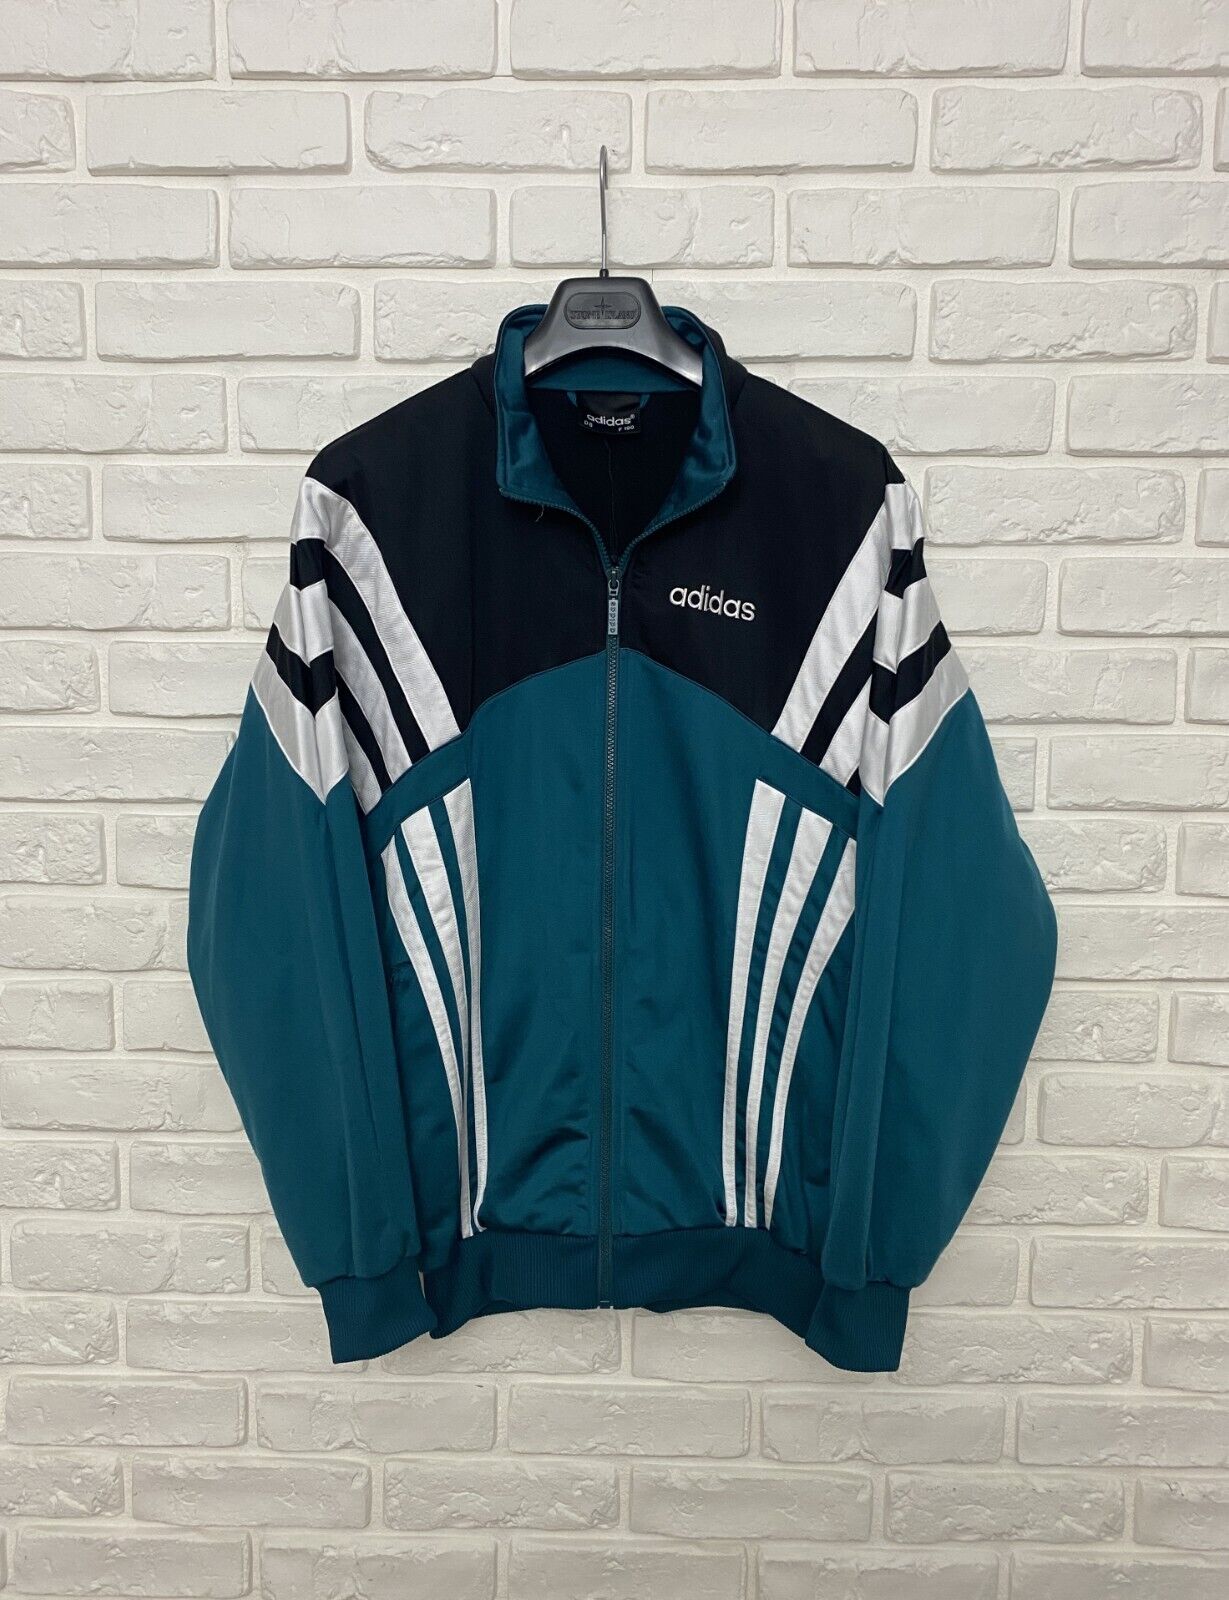 Vintage 90s 00s Adidas Retro Track Jacket Top Full Zip Size M | eBay